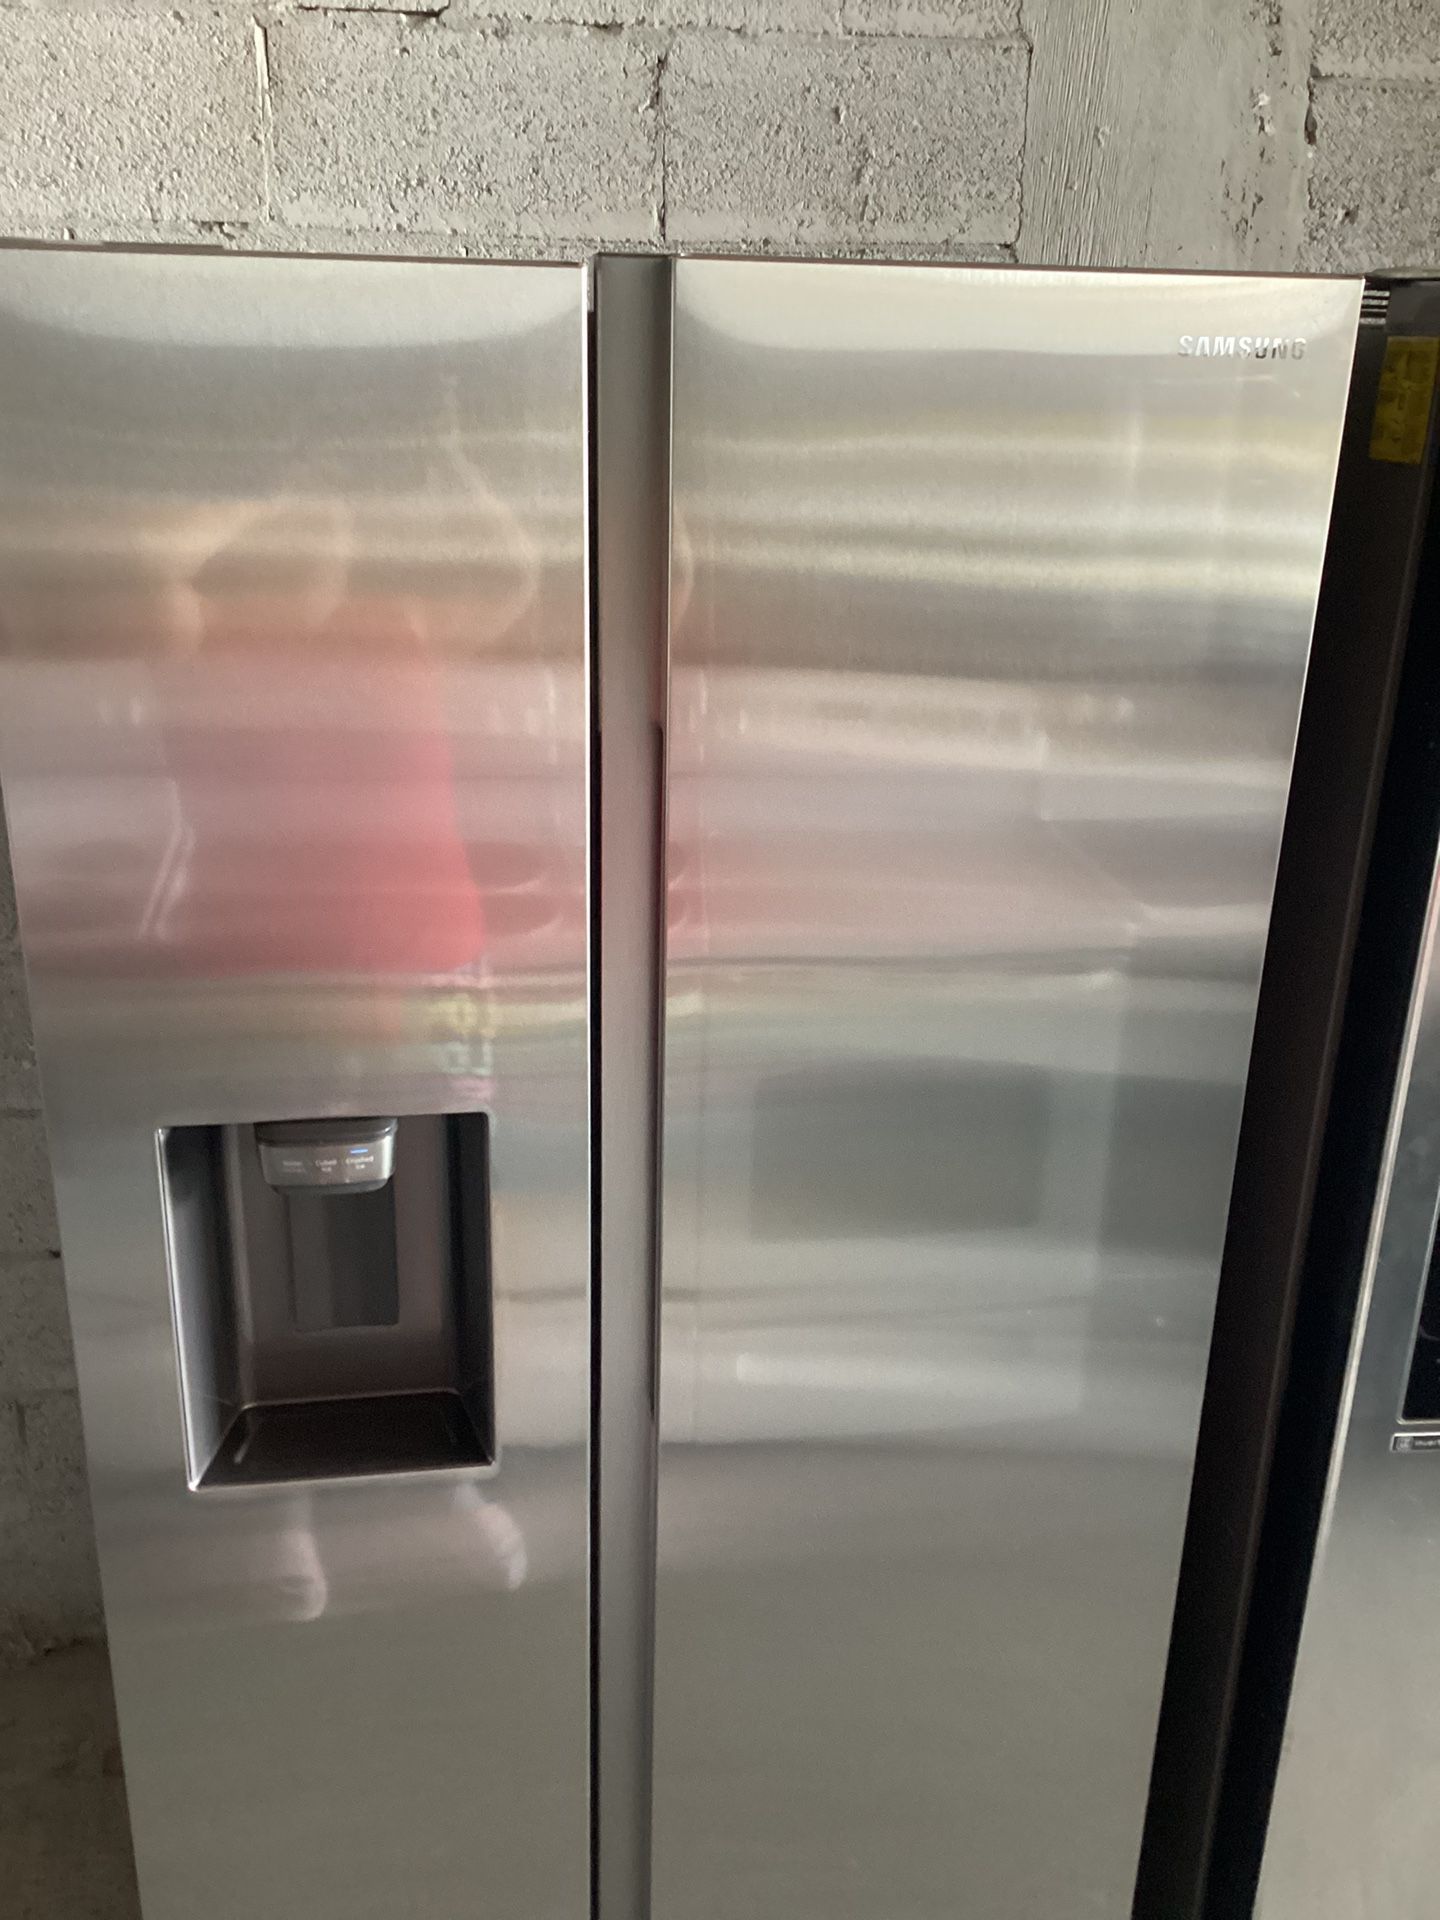 Refrigerator Samsung 36Inch